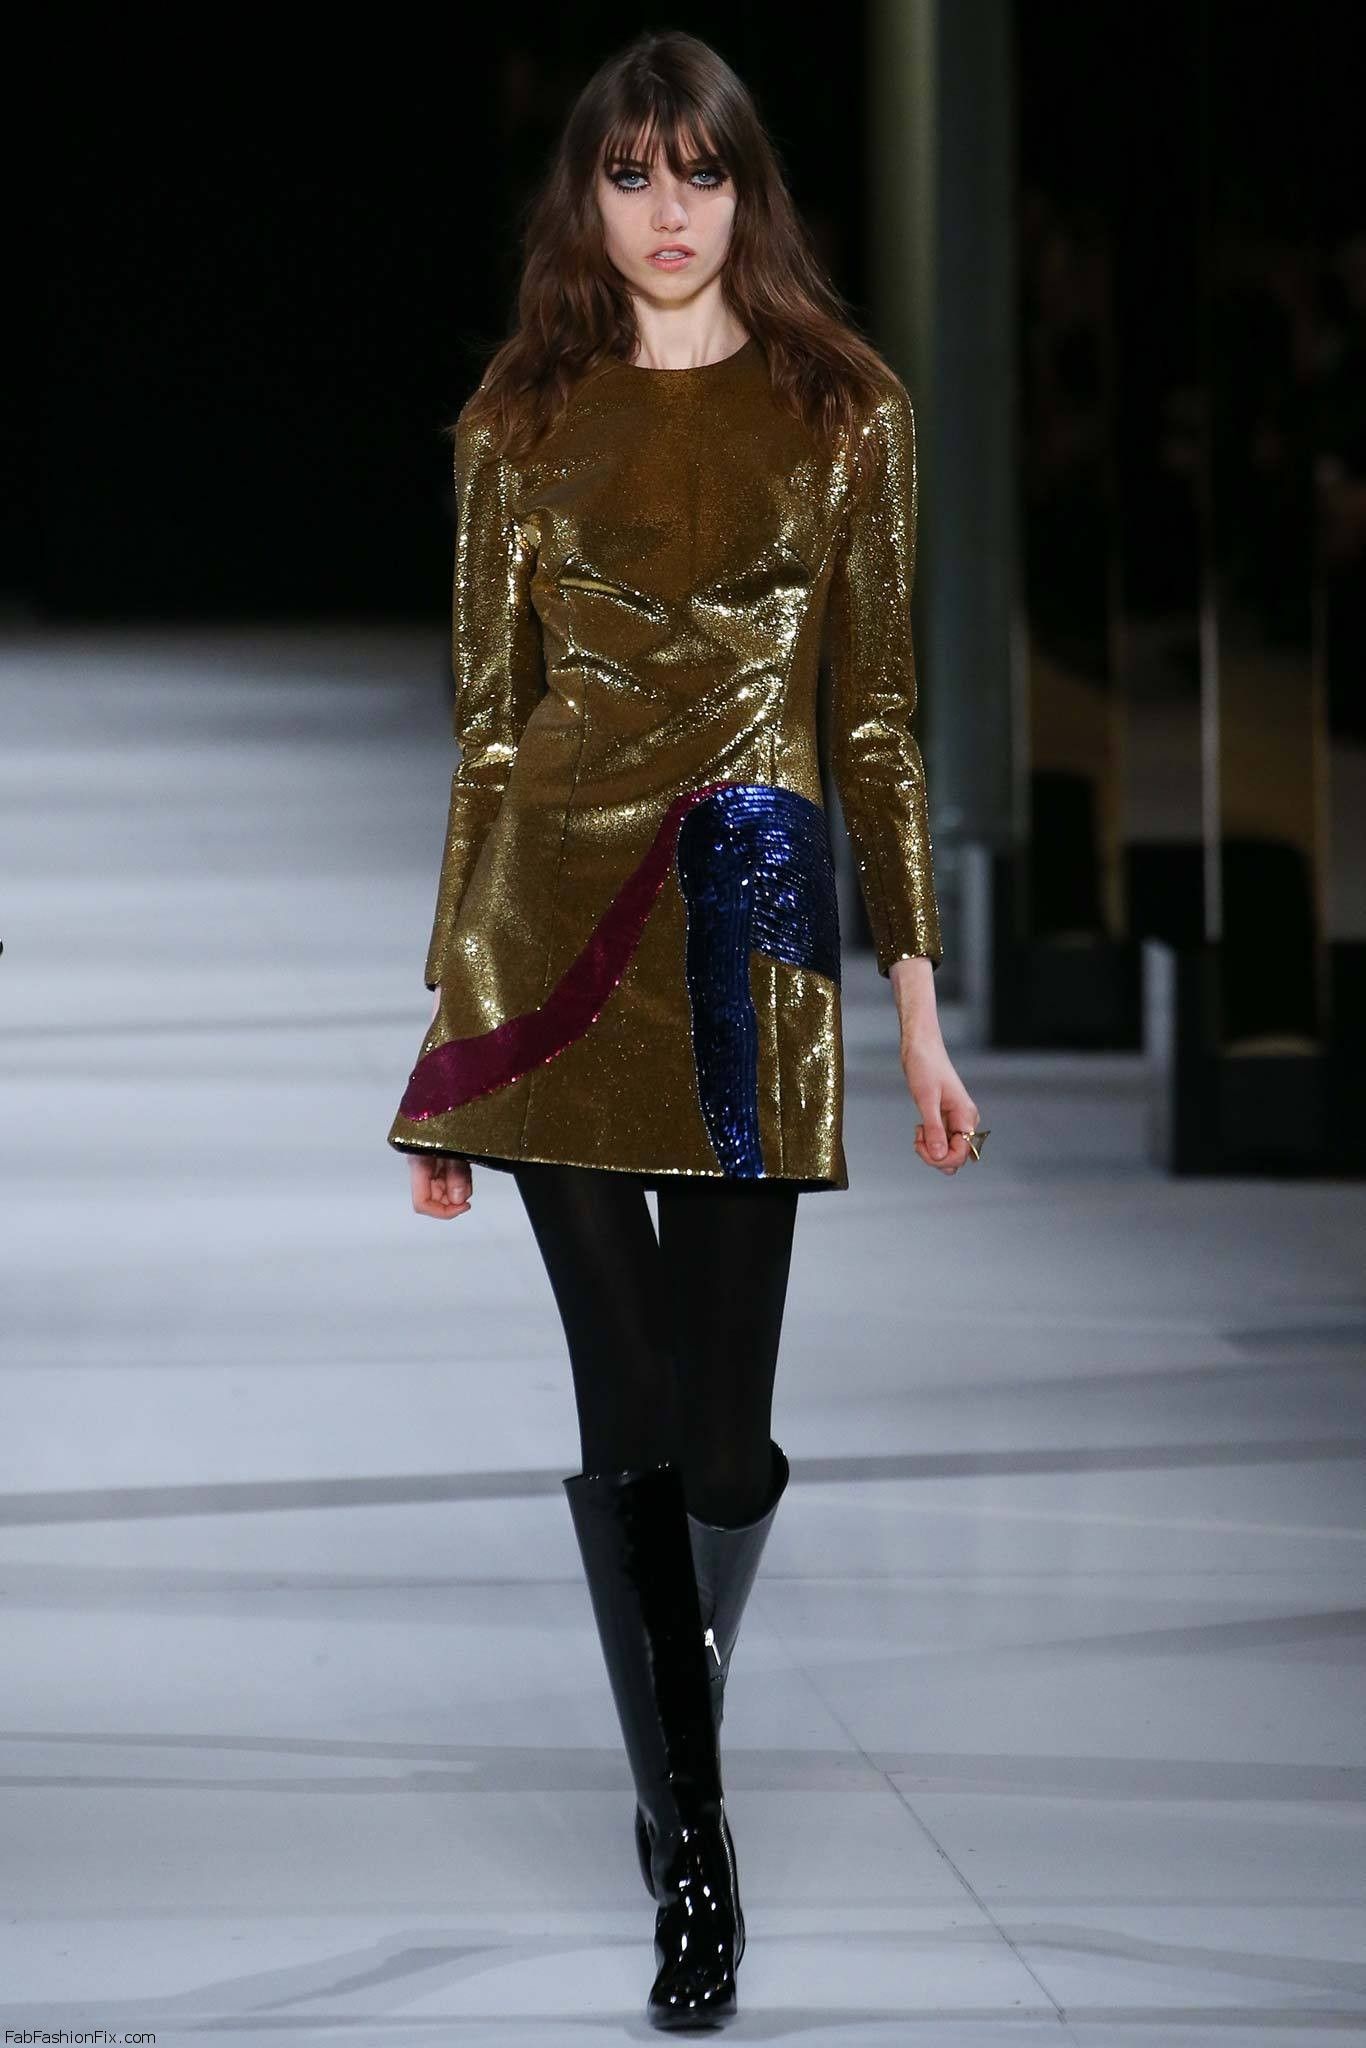 Saint Laurent fall/winter 2014 collection – Paris fashion week | Fab ...